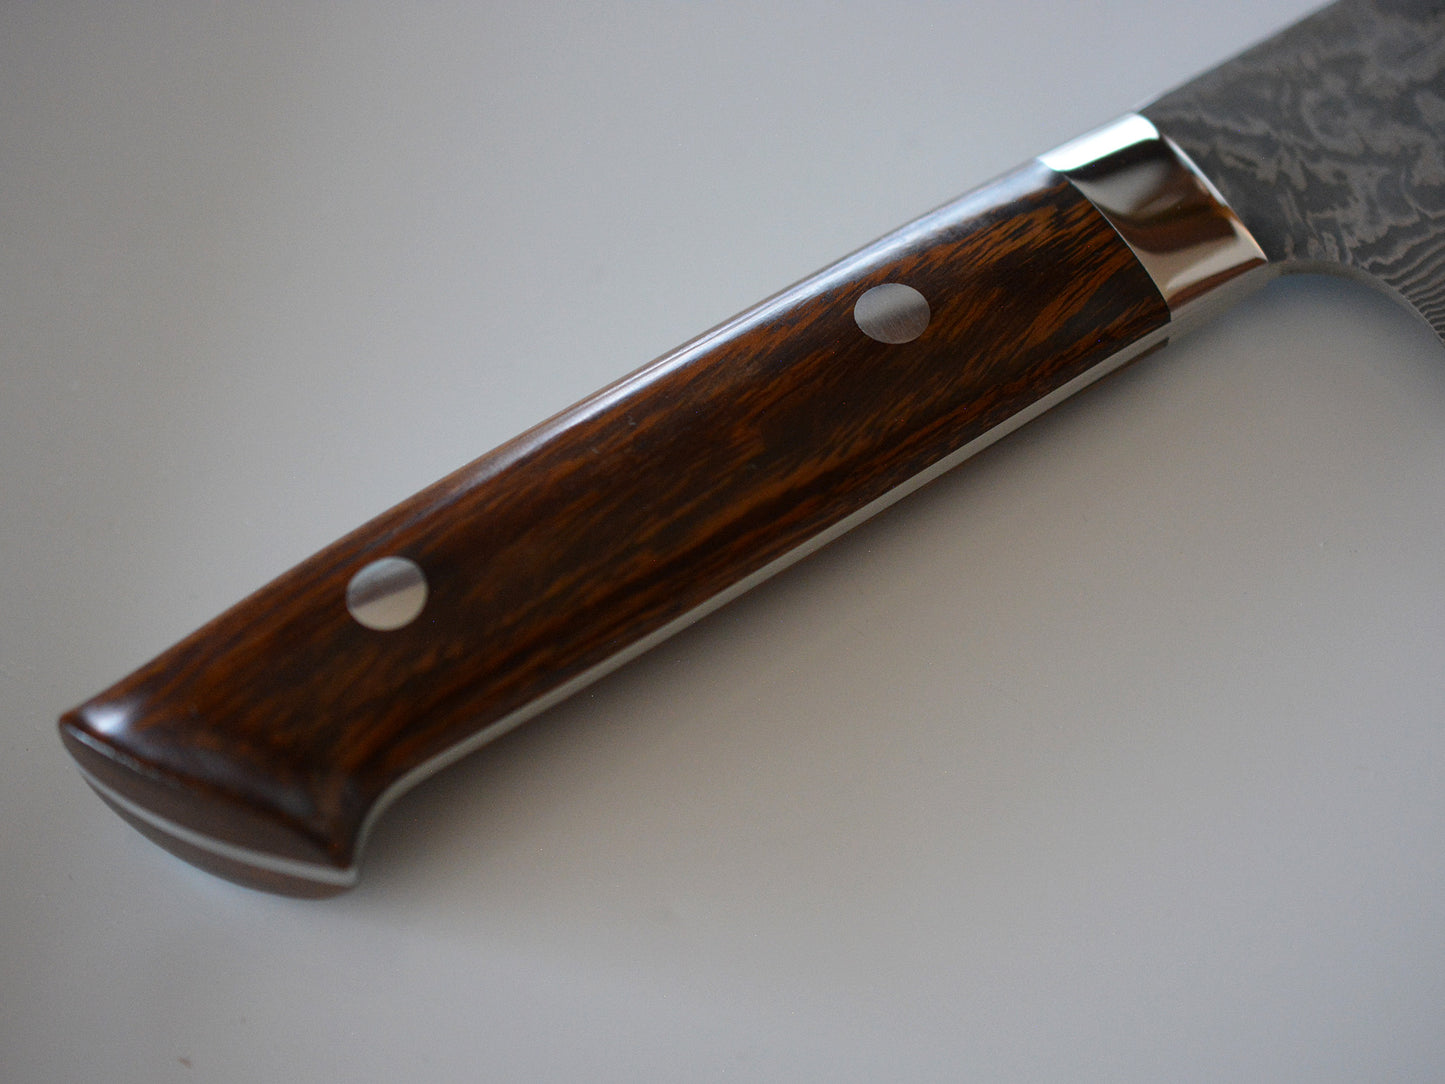 CS203 Cuchillo Japones Gyuto VG10 Damasco Mango de madera de hierro - Saji 21cm